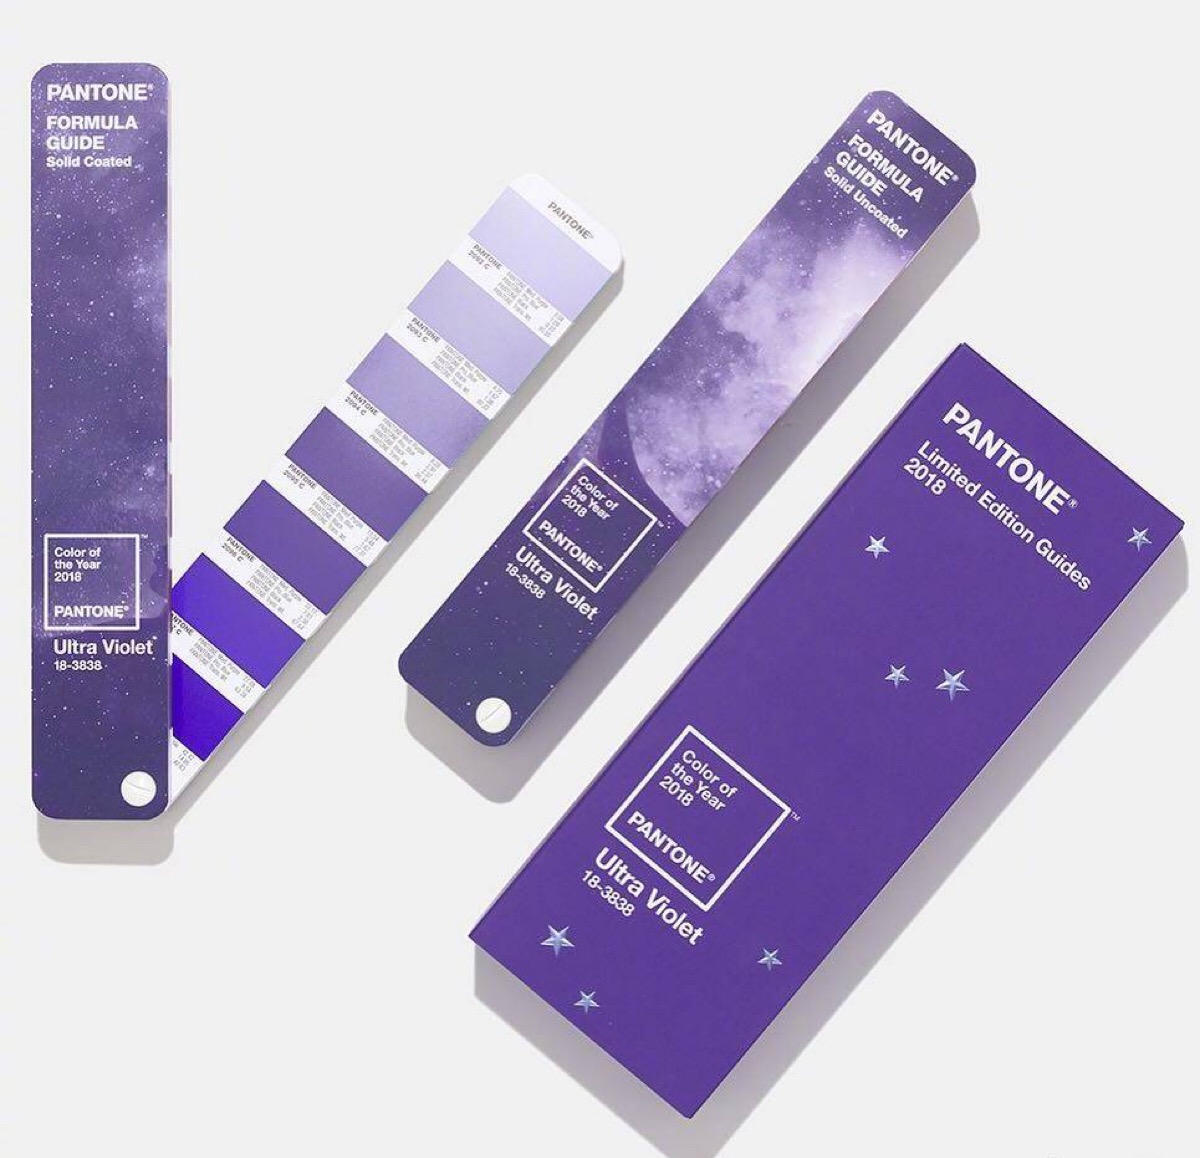 pantone公布2018年度流行色:编号18-3838的ultra violet紫外光色~令人